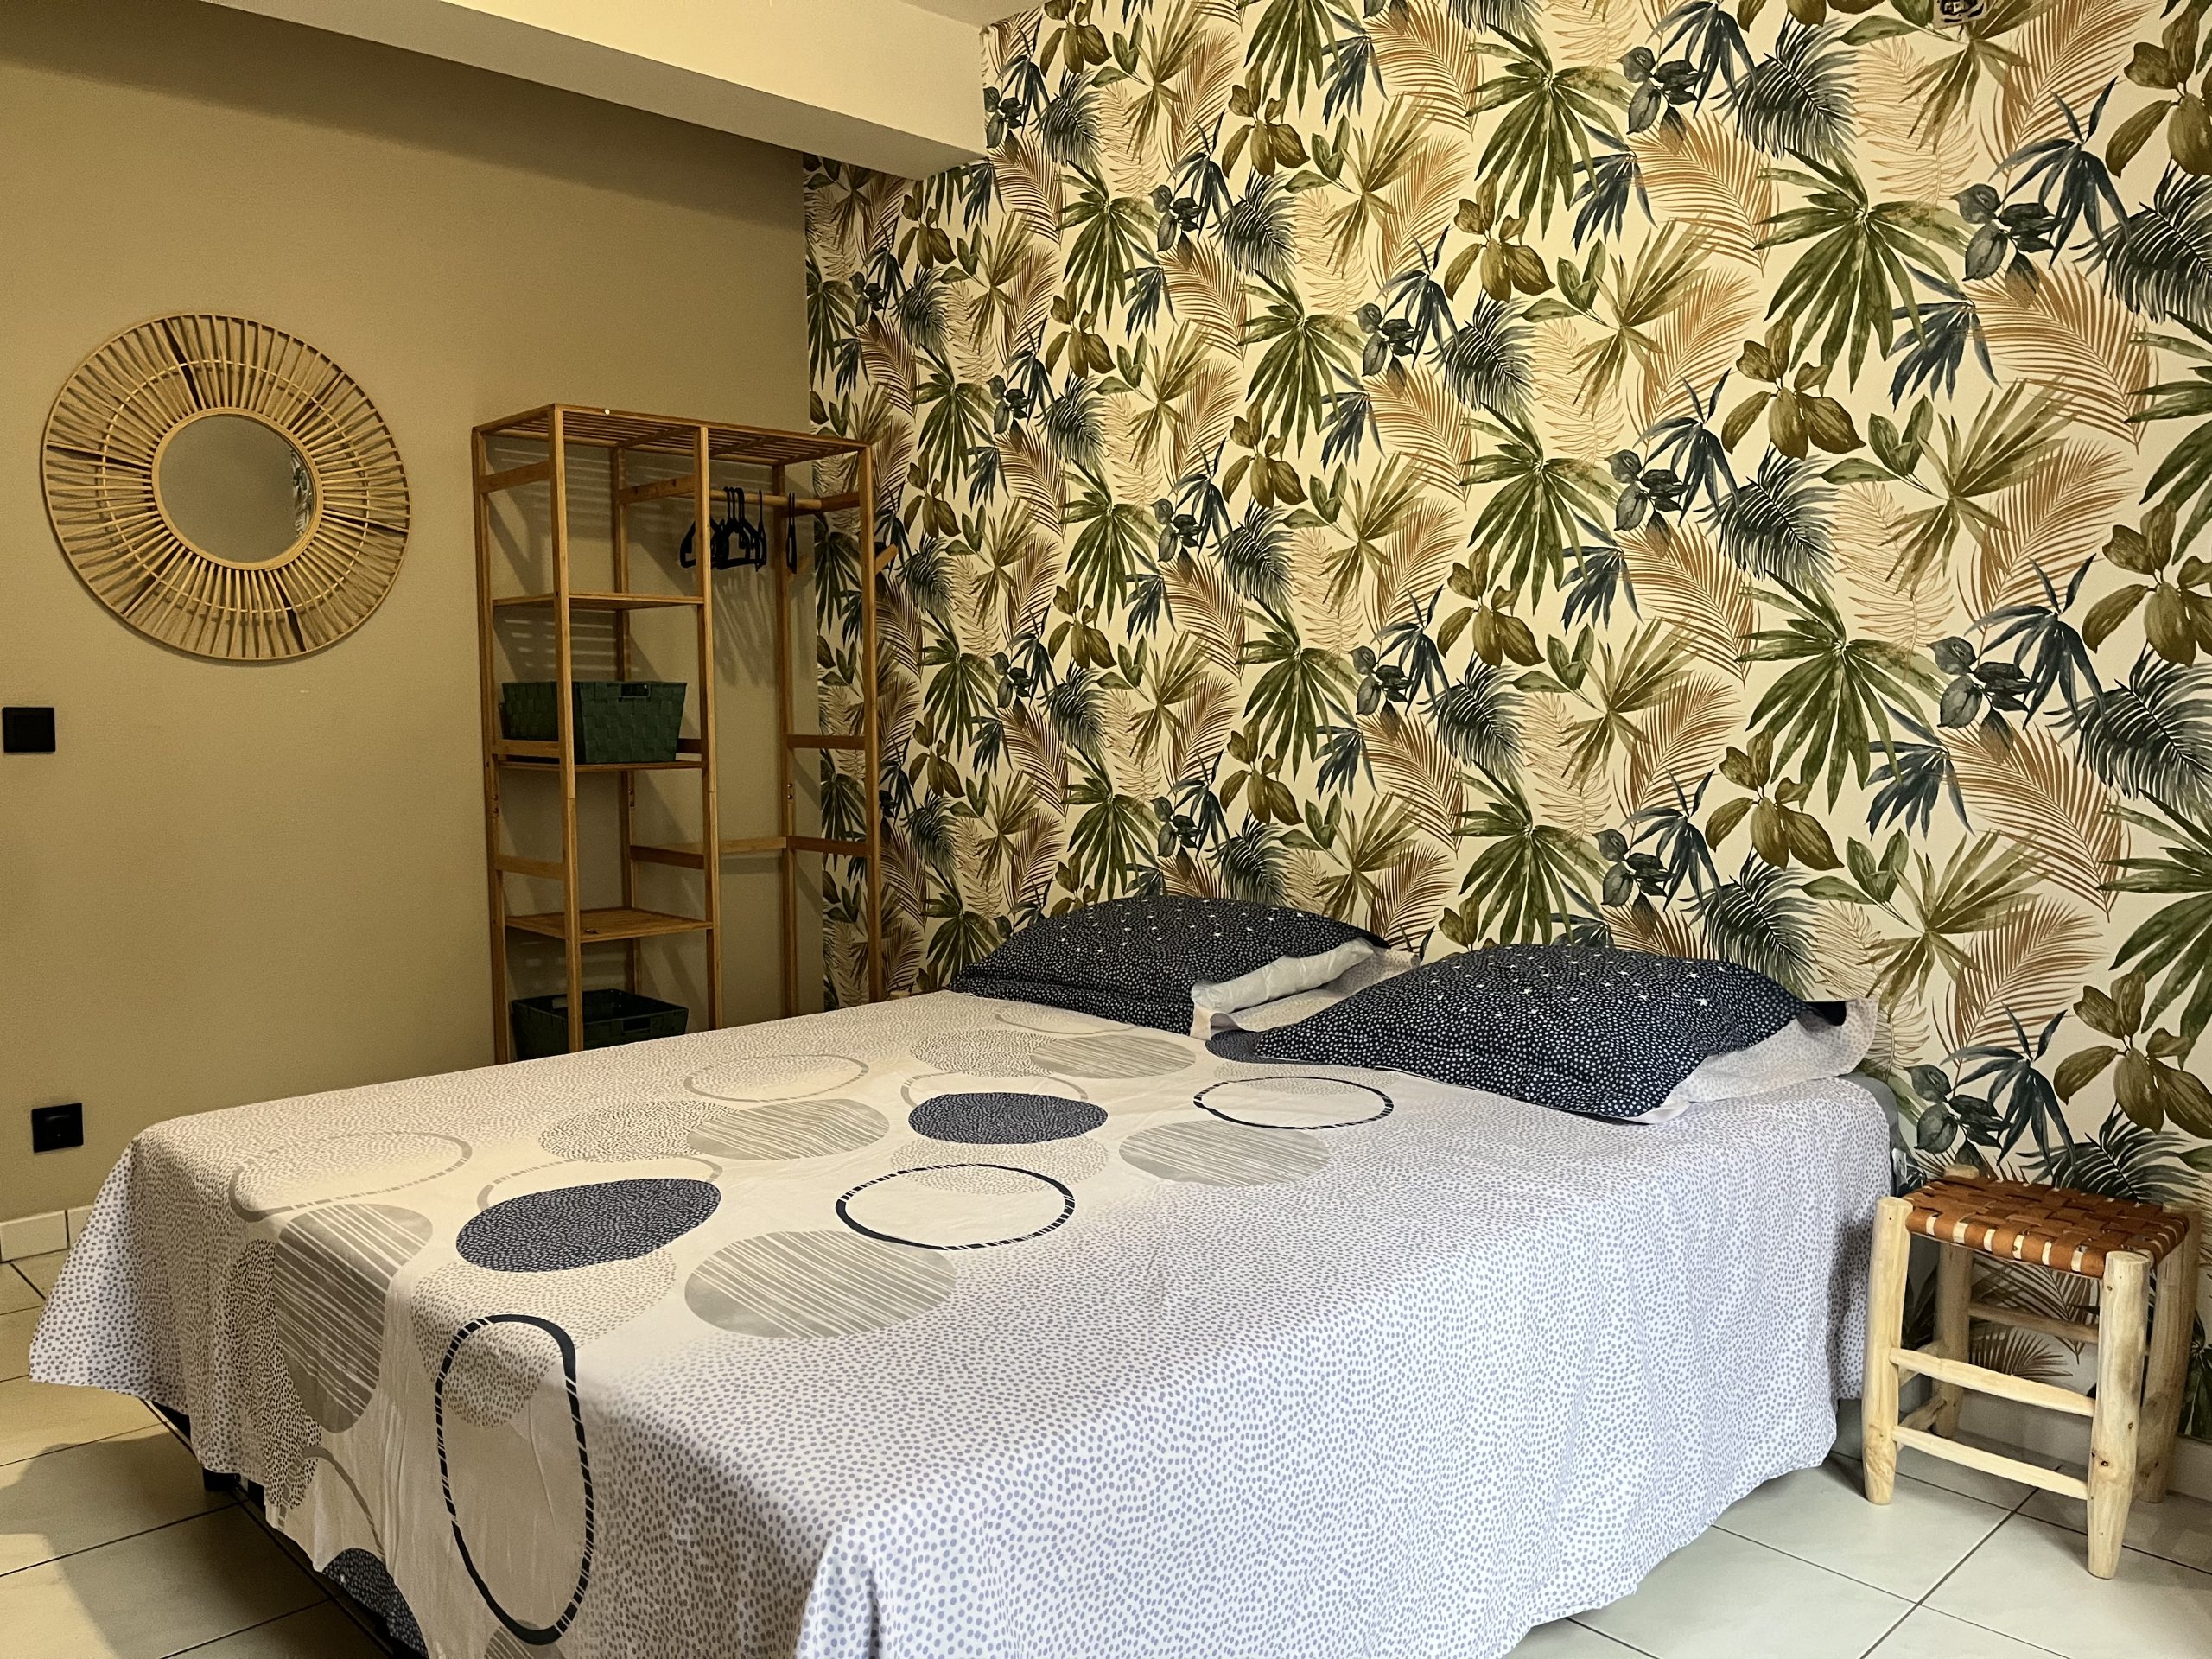 aparment-for rent-in-Oostende-bedroom